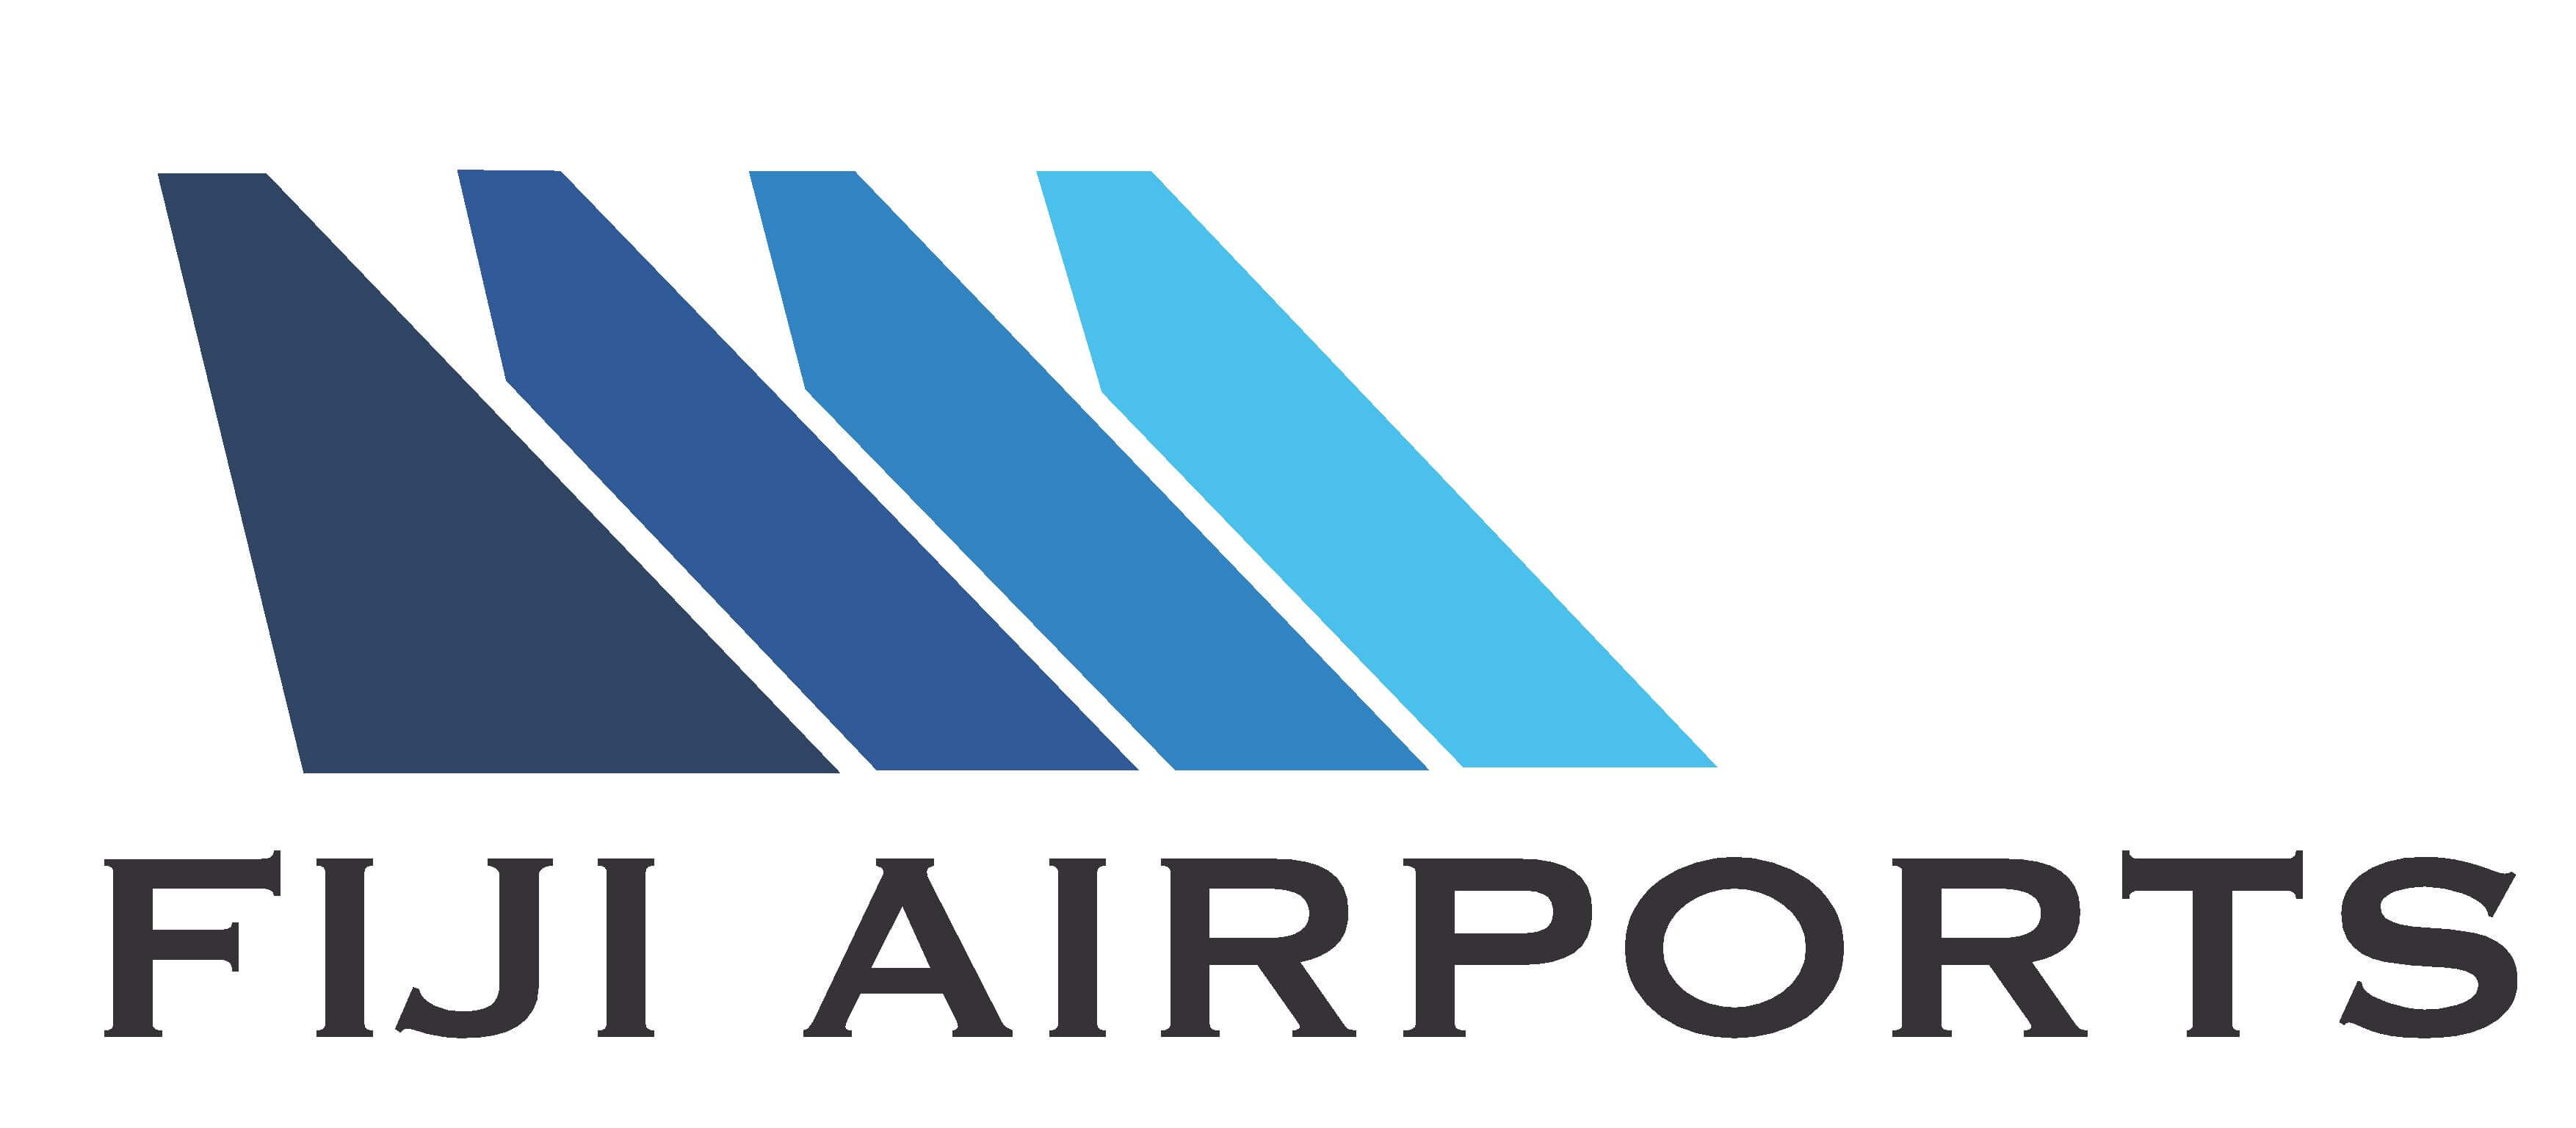 Fiji-Airports-logo-1.jpg